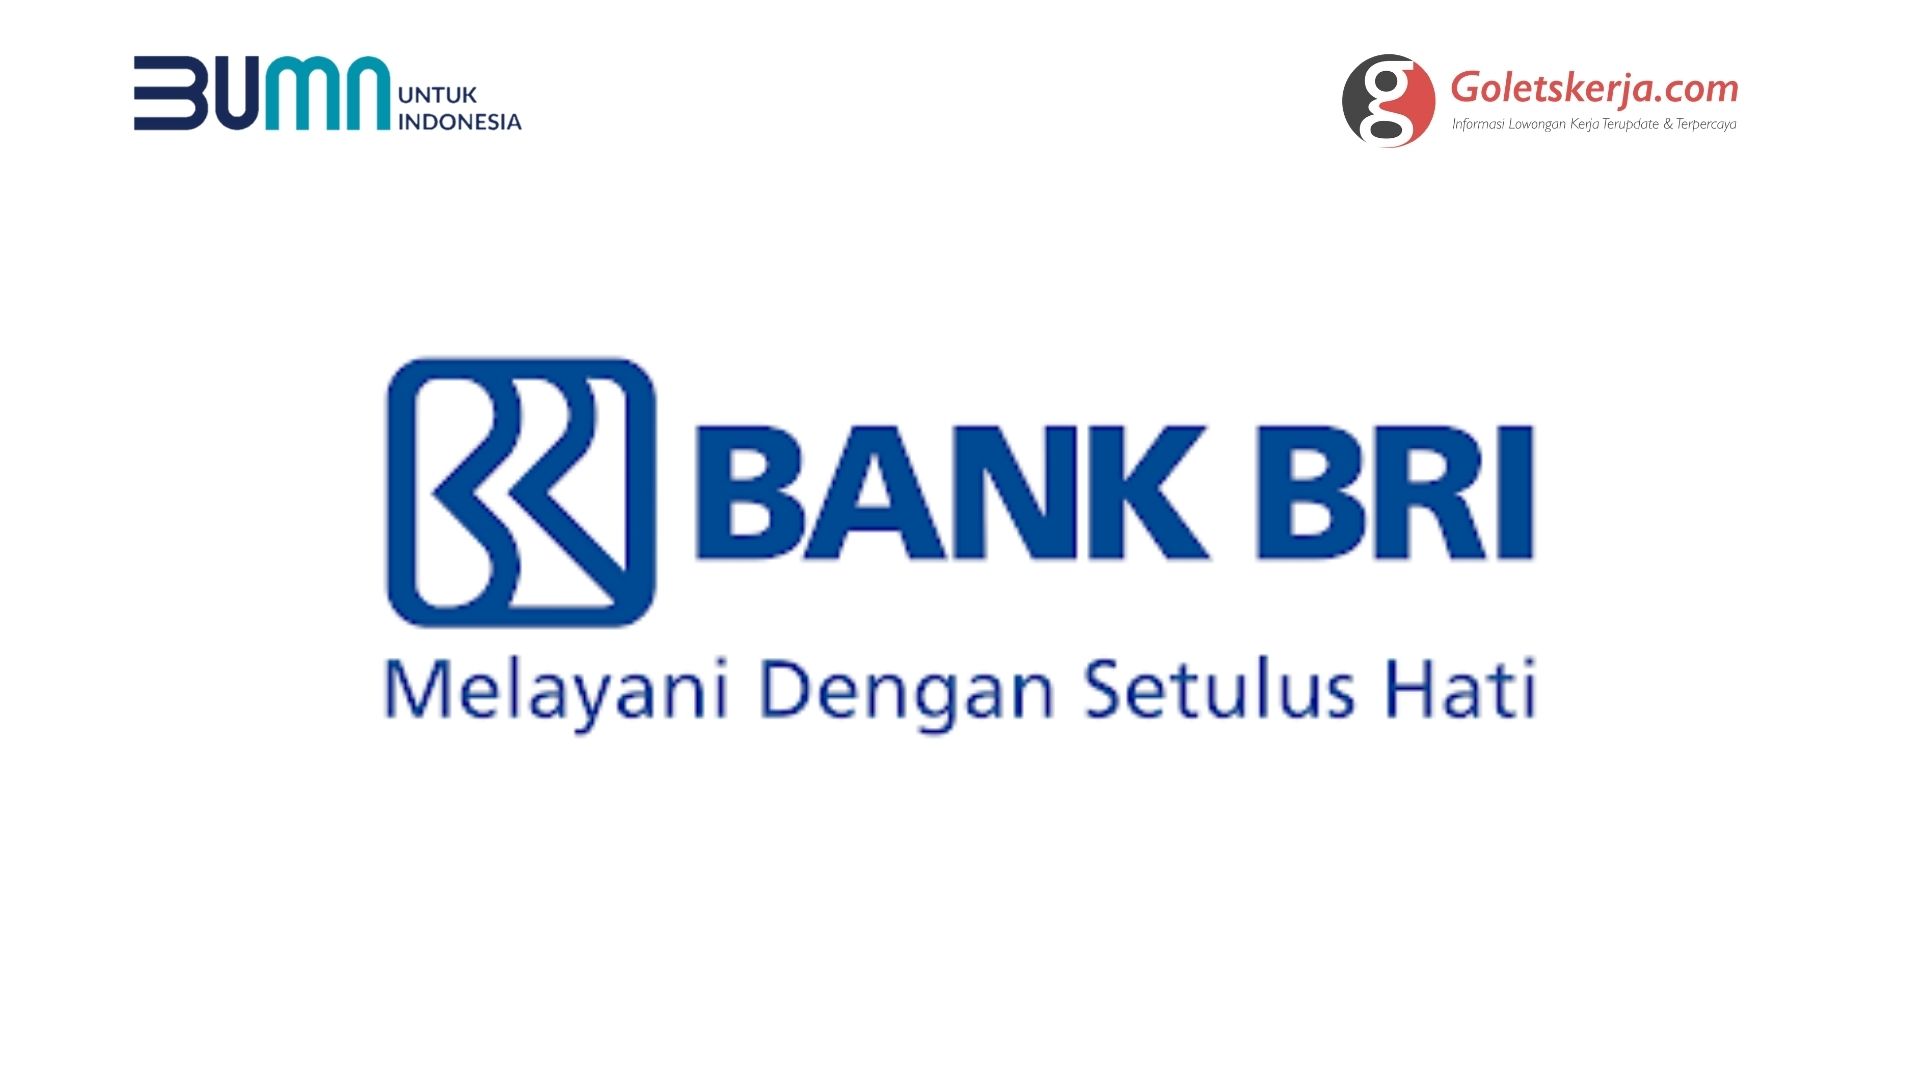 Lowongan BUMN PT Bank Rakyat Indonesia (Persero) Tbk